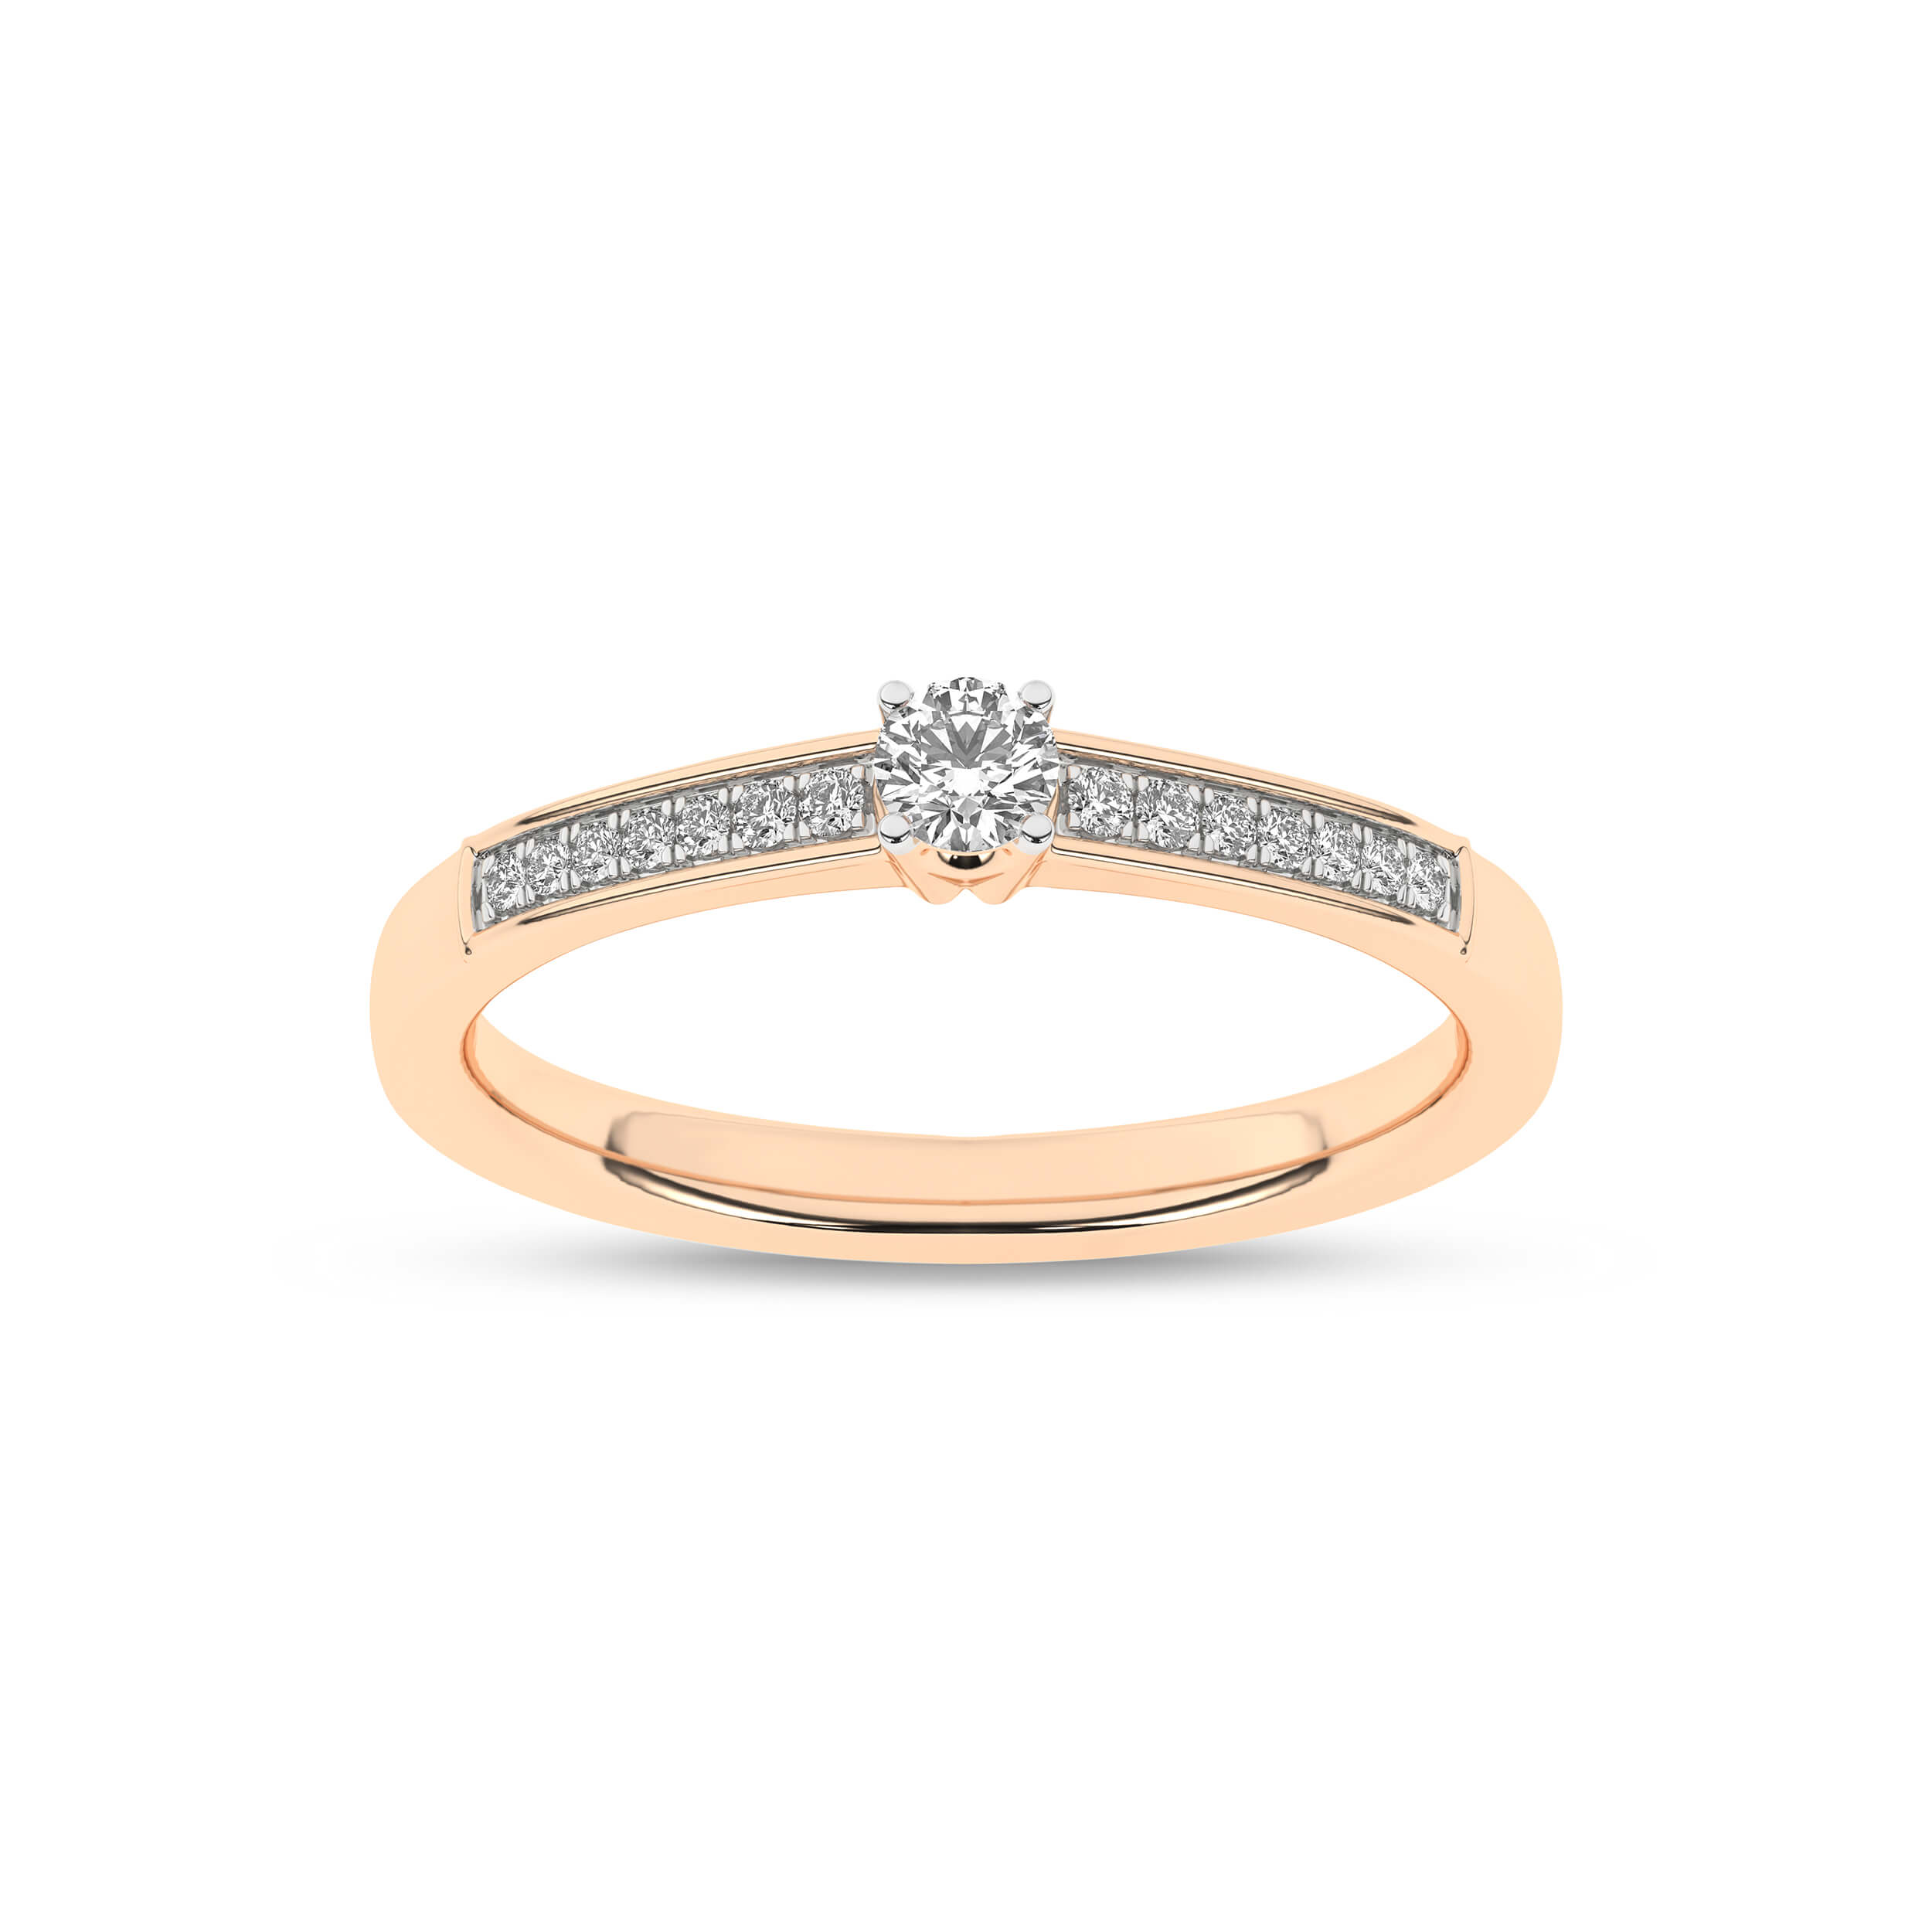 Inel de logodna din Aur Roz 14K cu Diamante 0.15Ct, articol RB17824EG, previzualizare foto 1